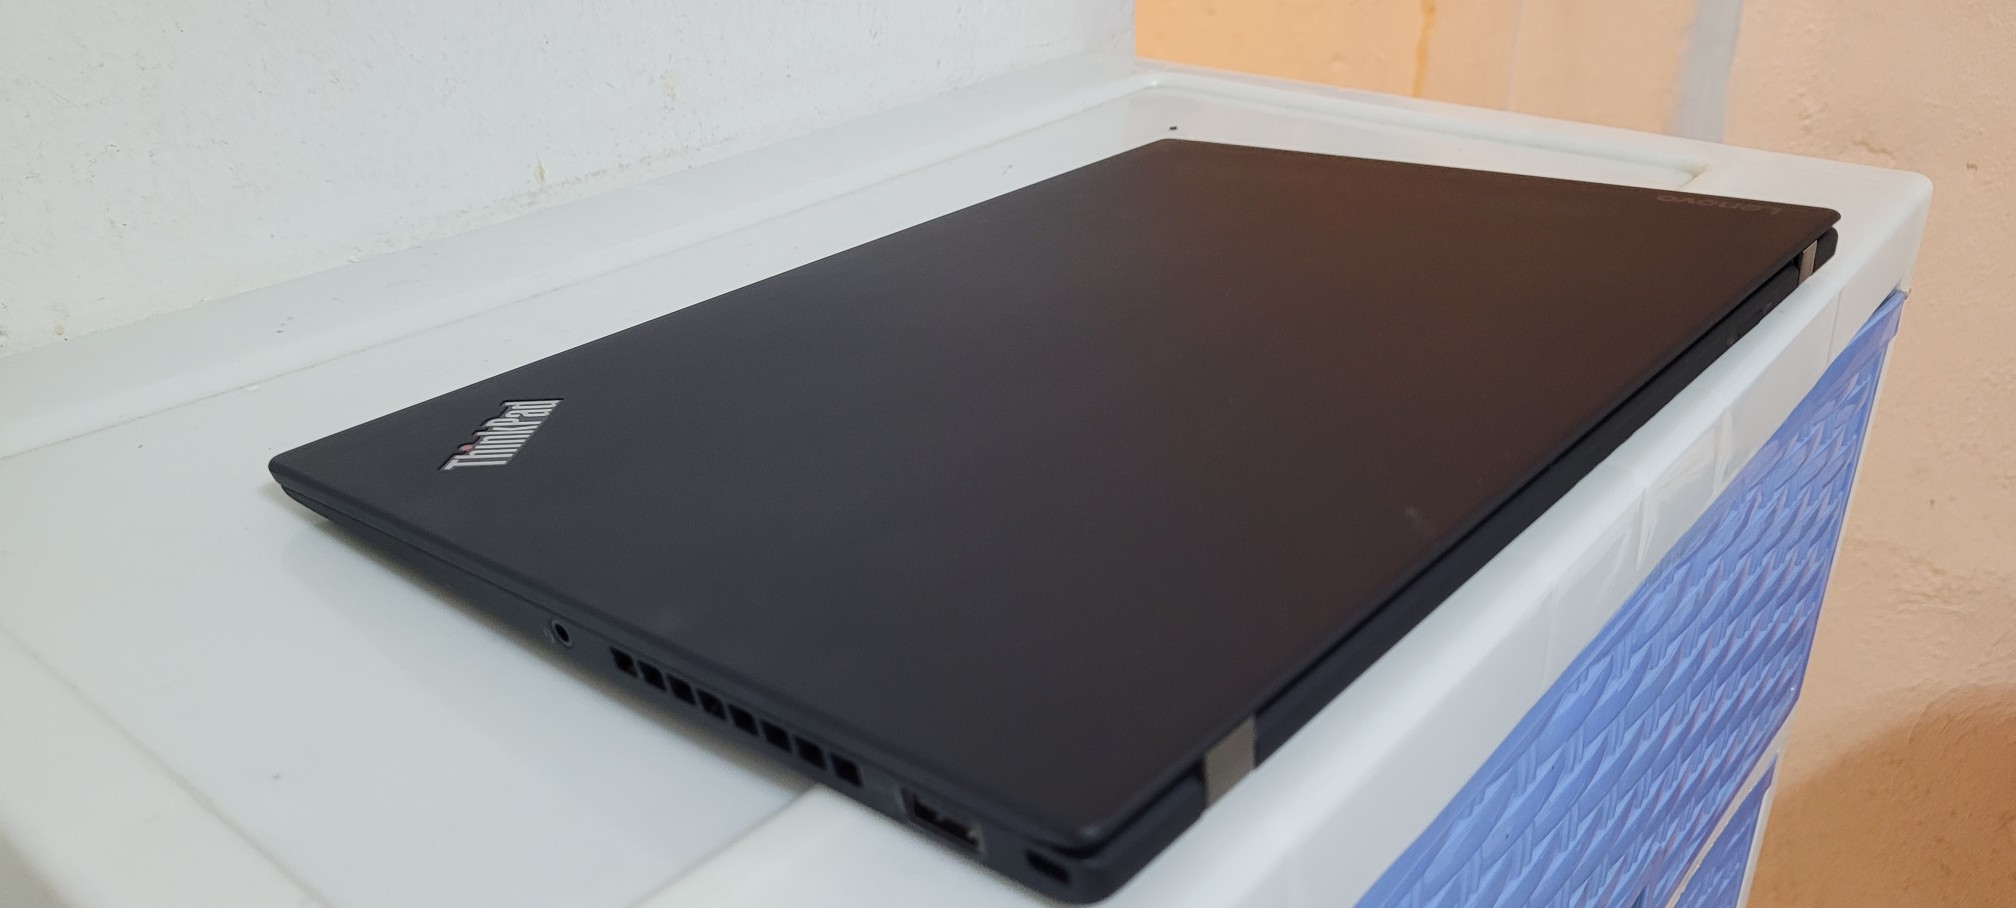 computadoras y laptops - Lenovo Slim T490 14 Pulg Core i5 8va Gen Ram 16gb ddr4 Disco 256gb Video 8gb 2